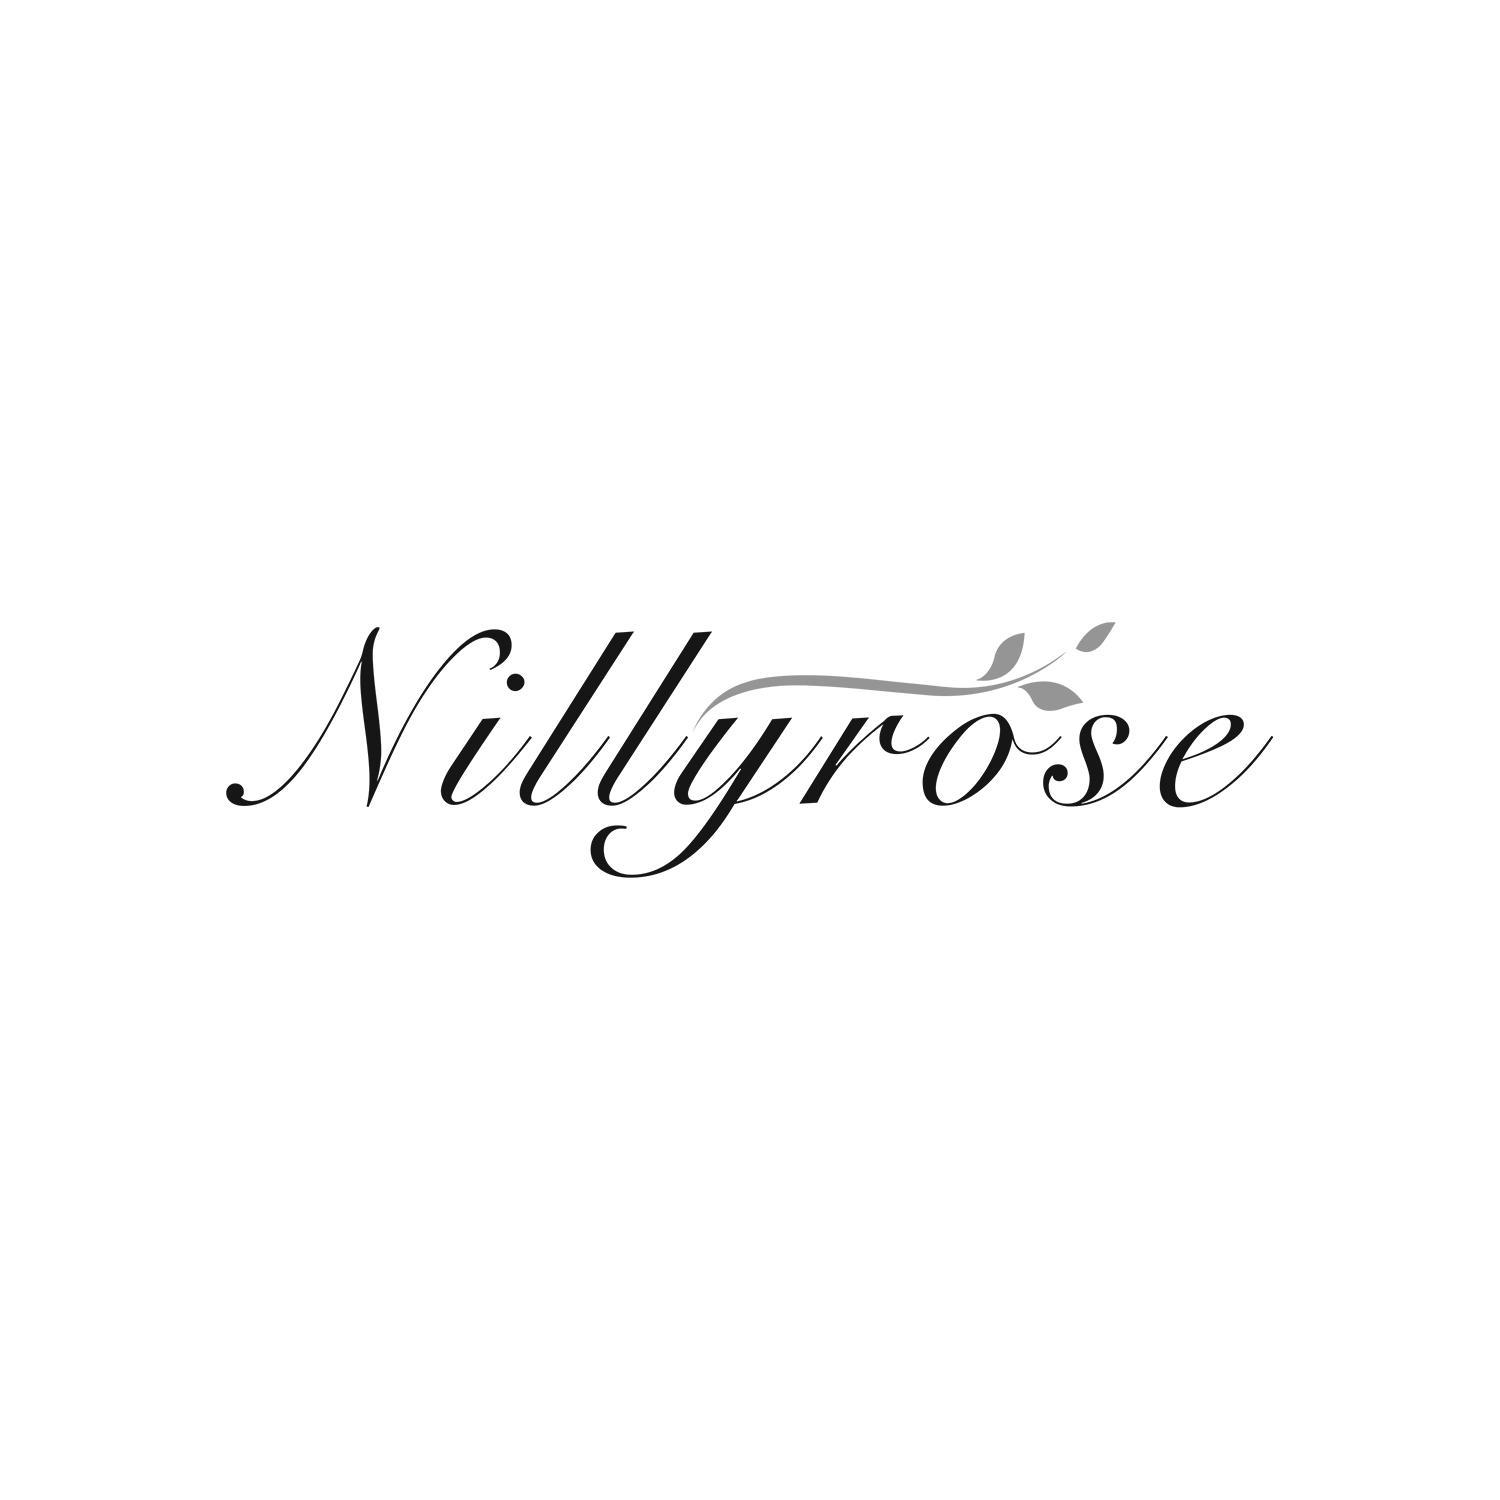 NILLYROSE